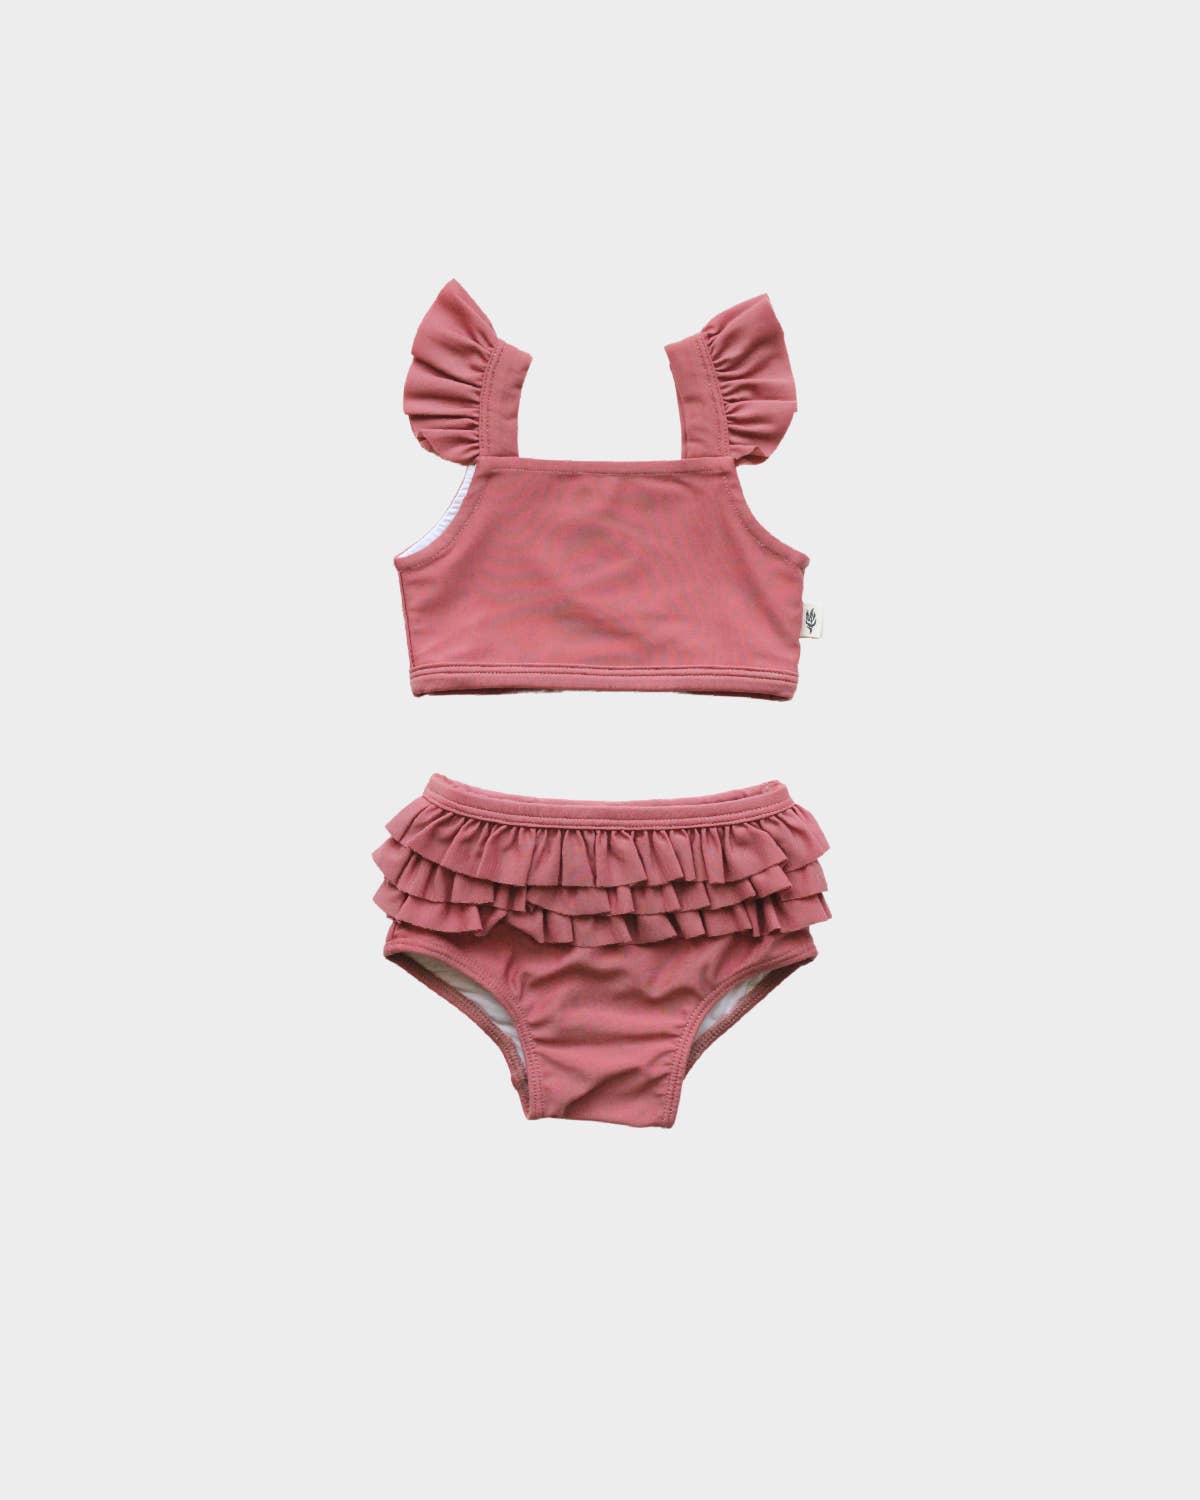 S23 D2: Baby Girl's Two-Piece Swim Suit in Dark Rose